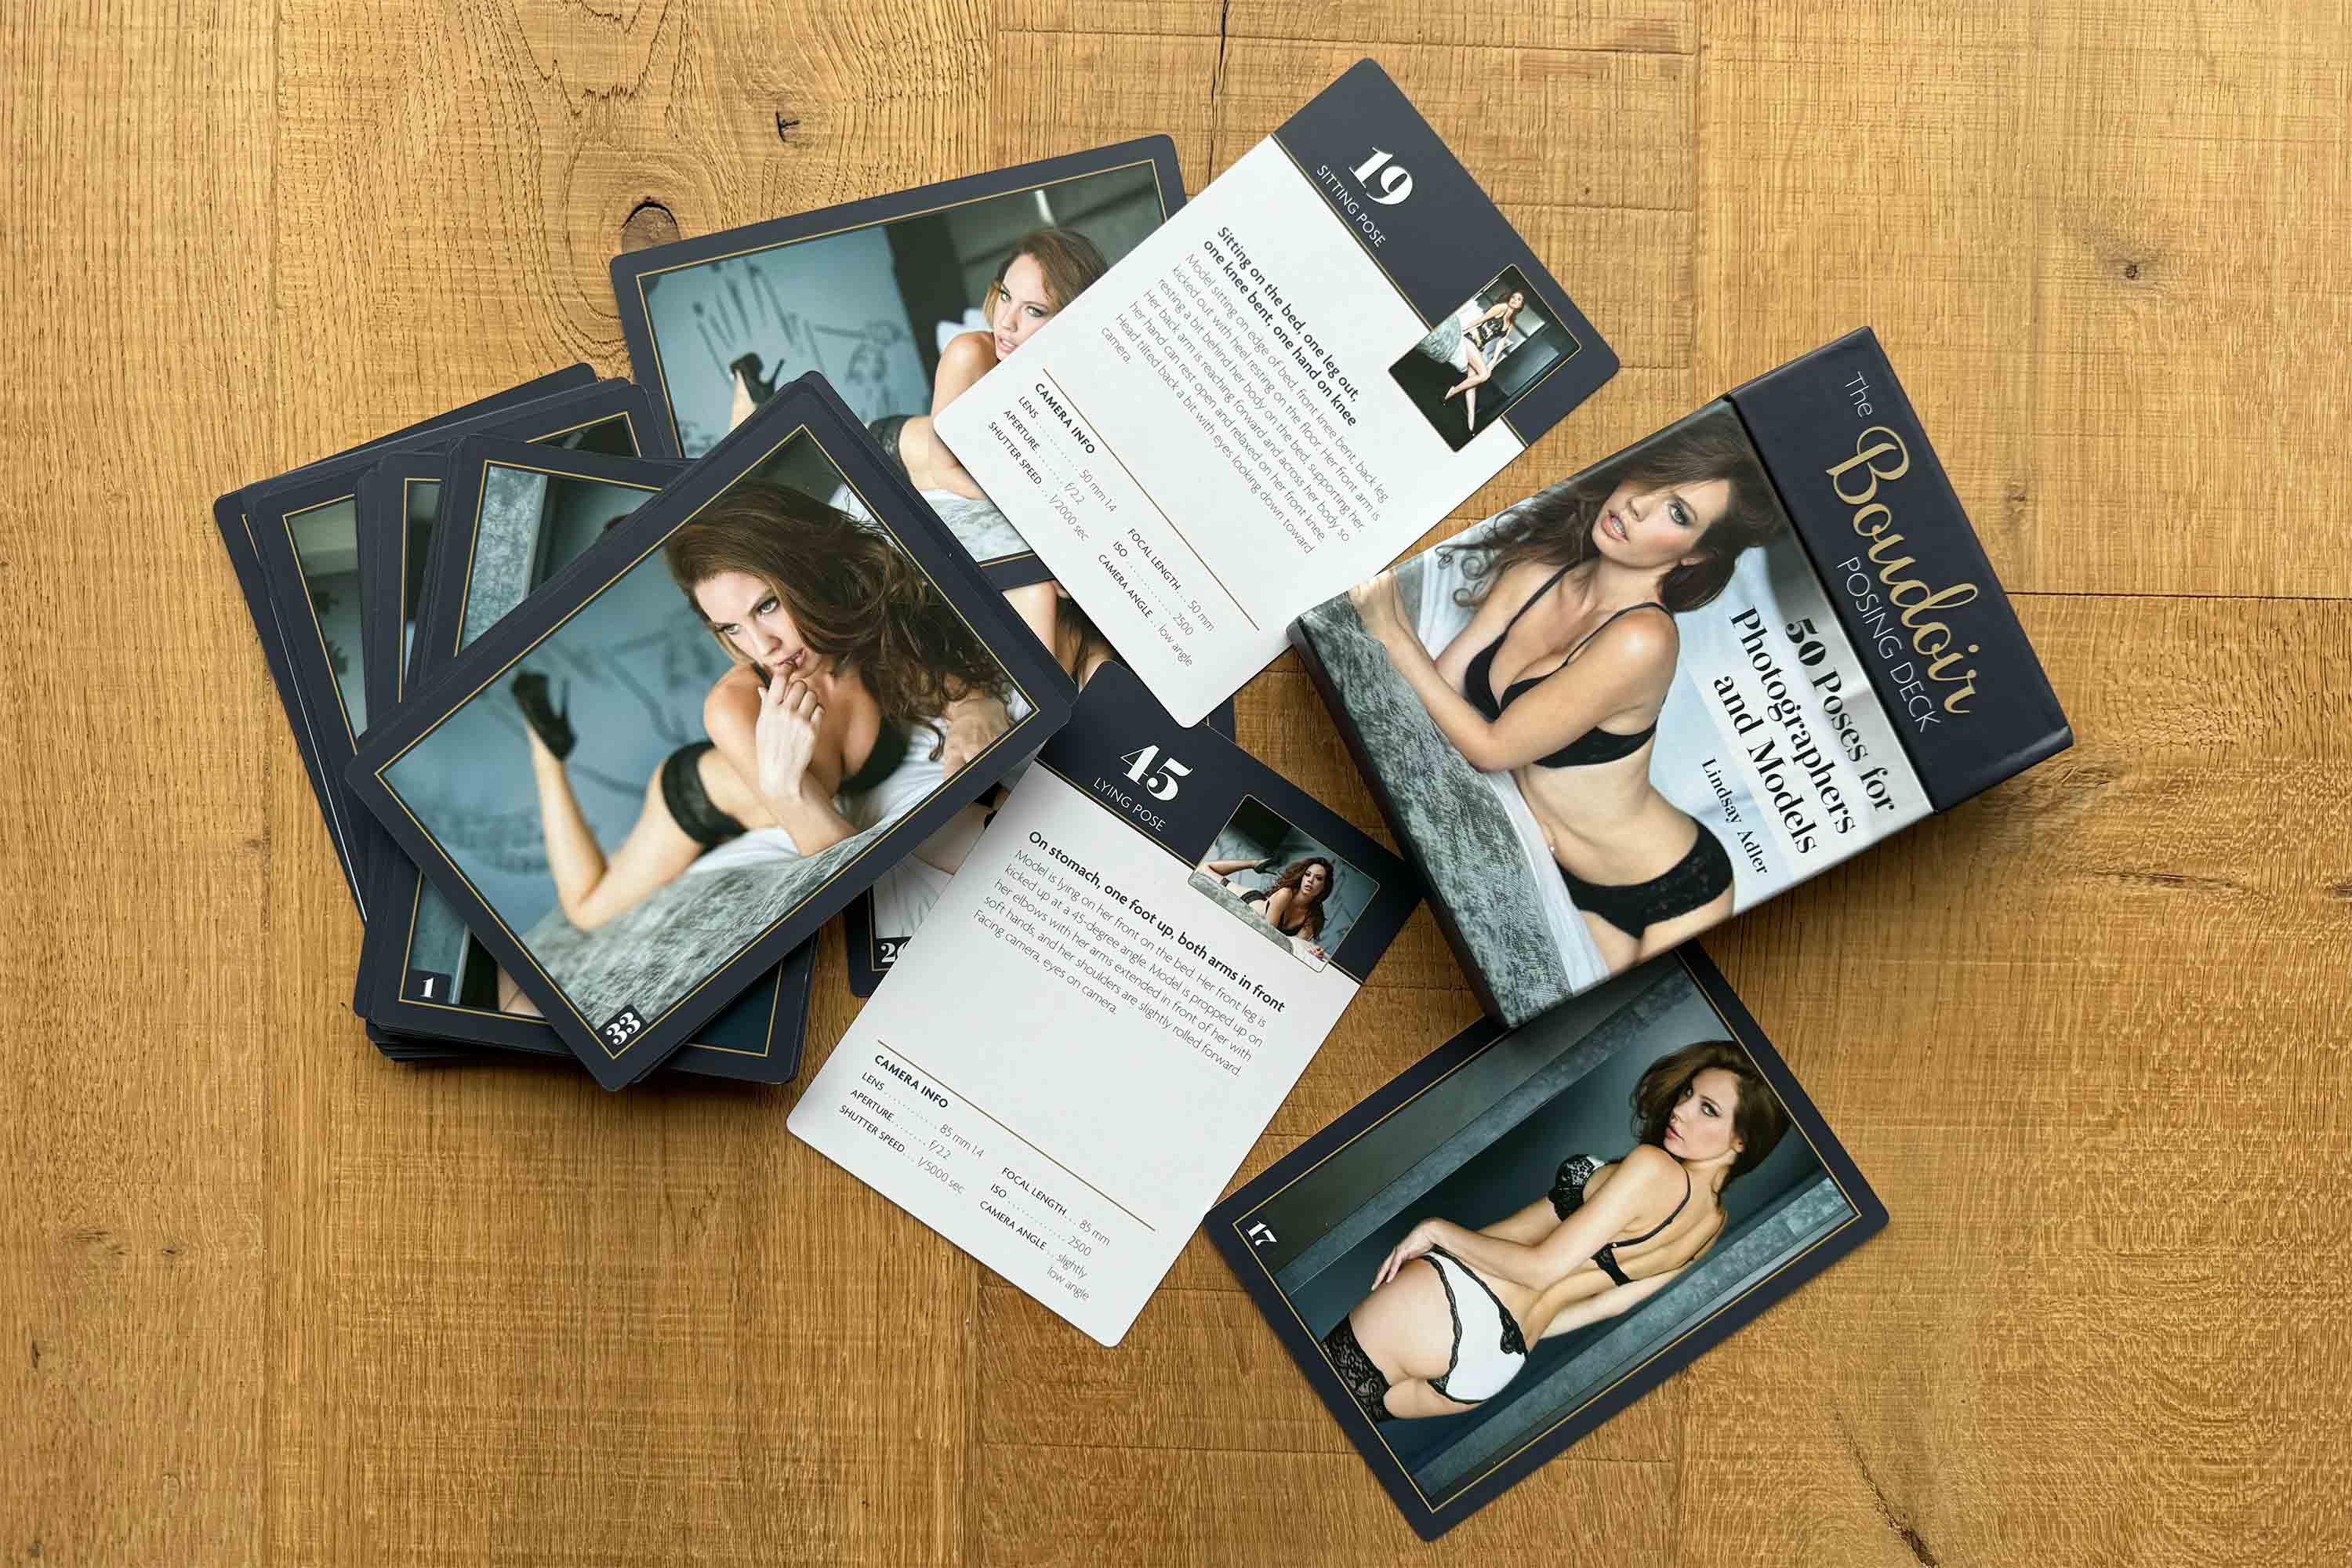 The boudoir posing cards Lindsey Adler